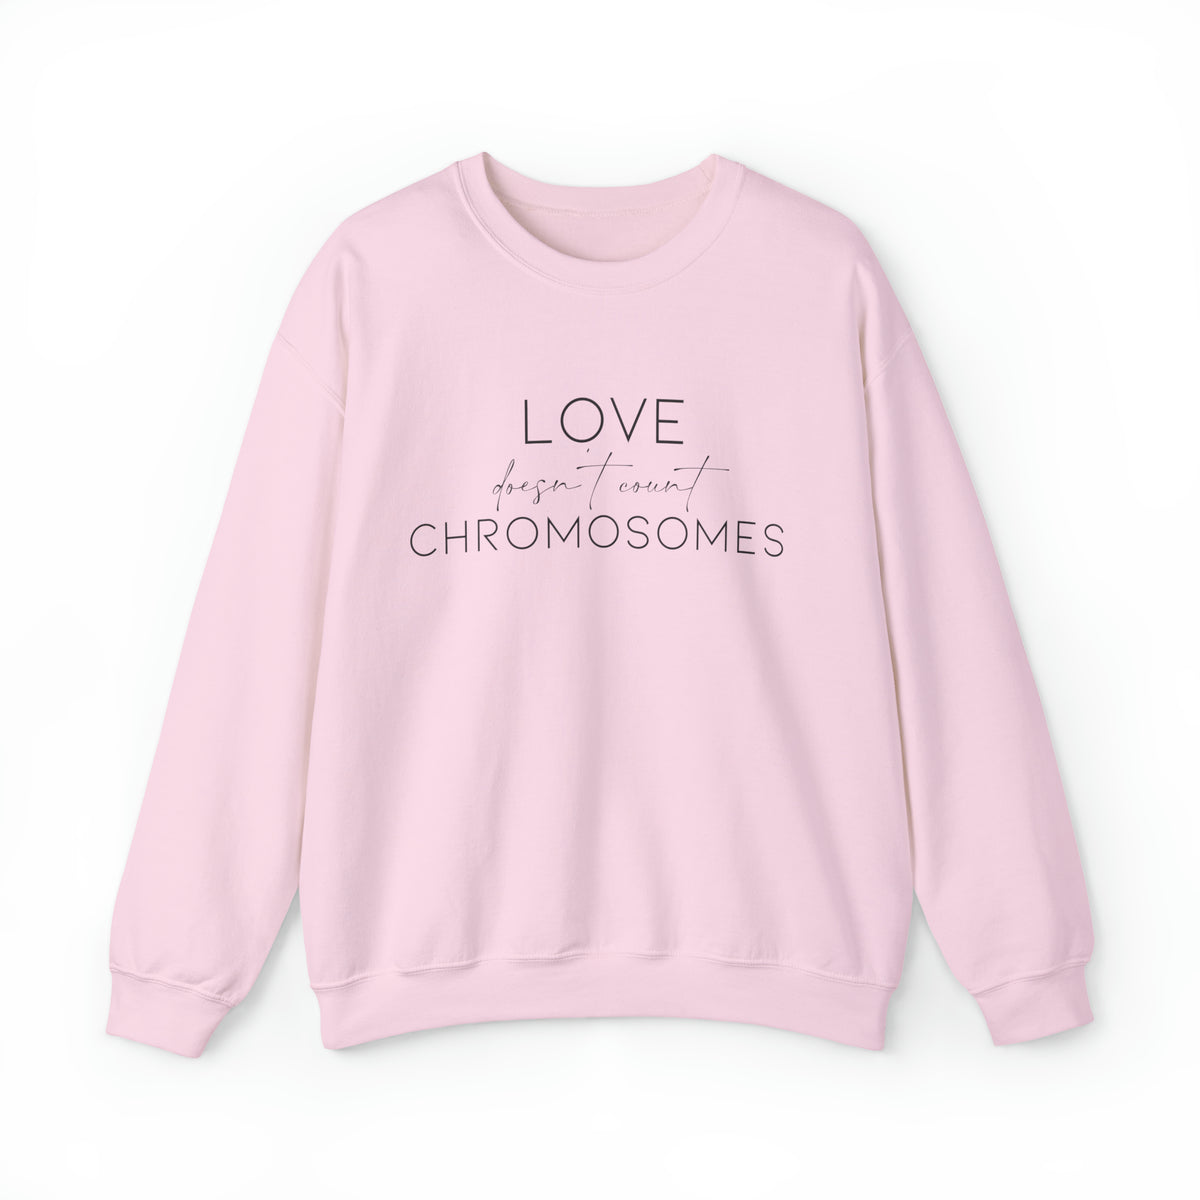 Love Doesn’t Count Chromosomes Gildan Unisex Heavy Blend™ Crewneck Sweatshirt